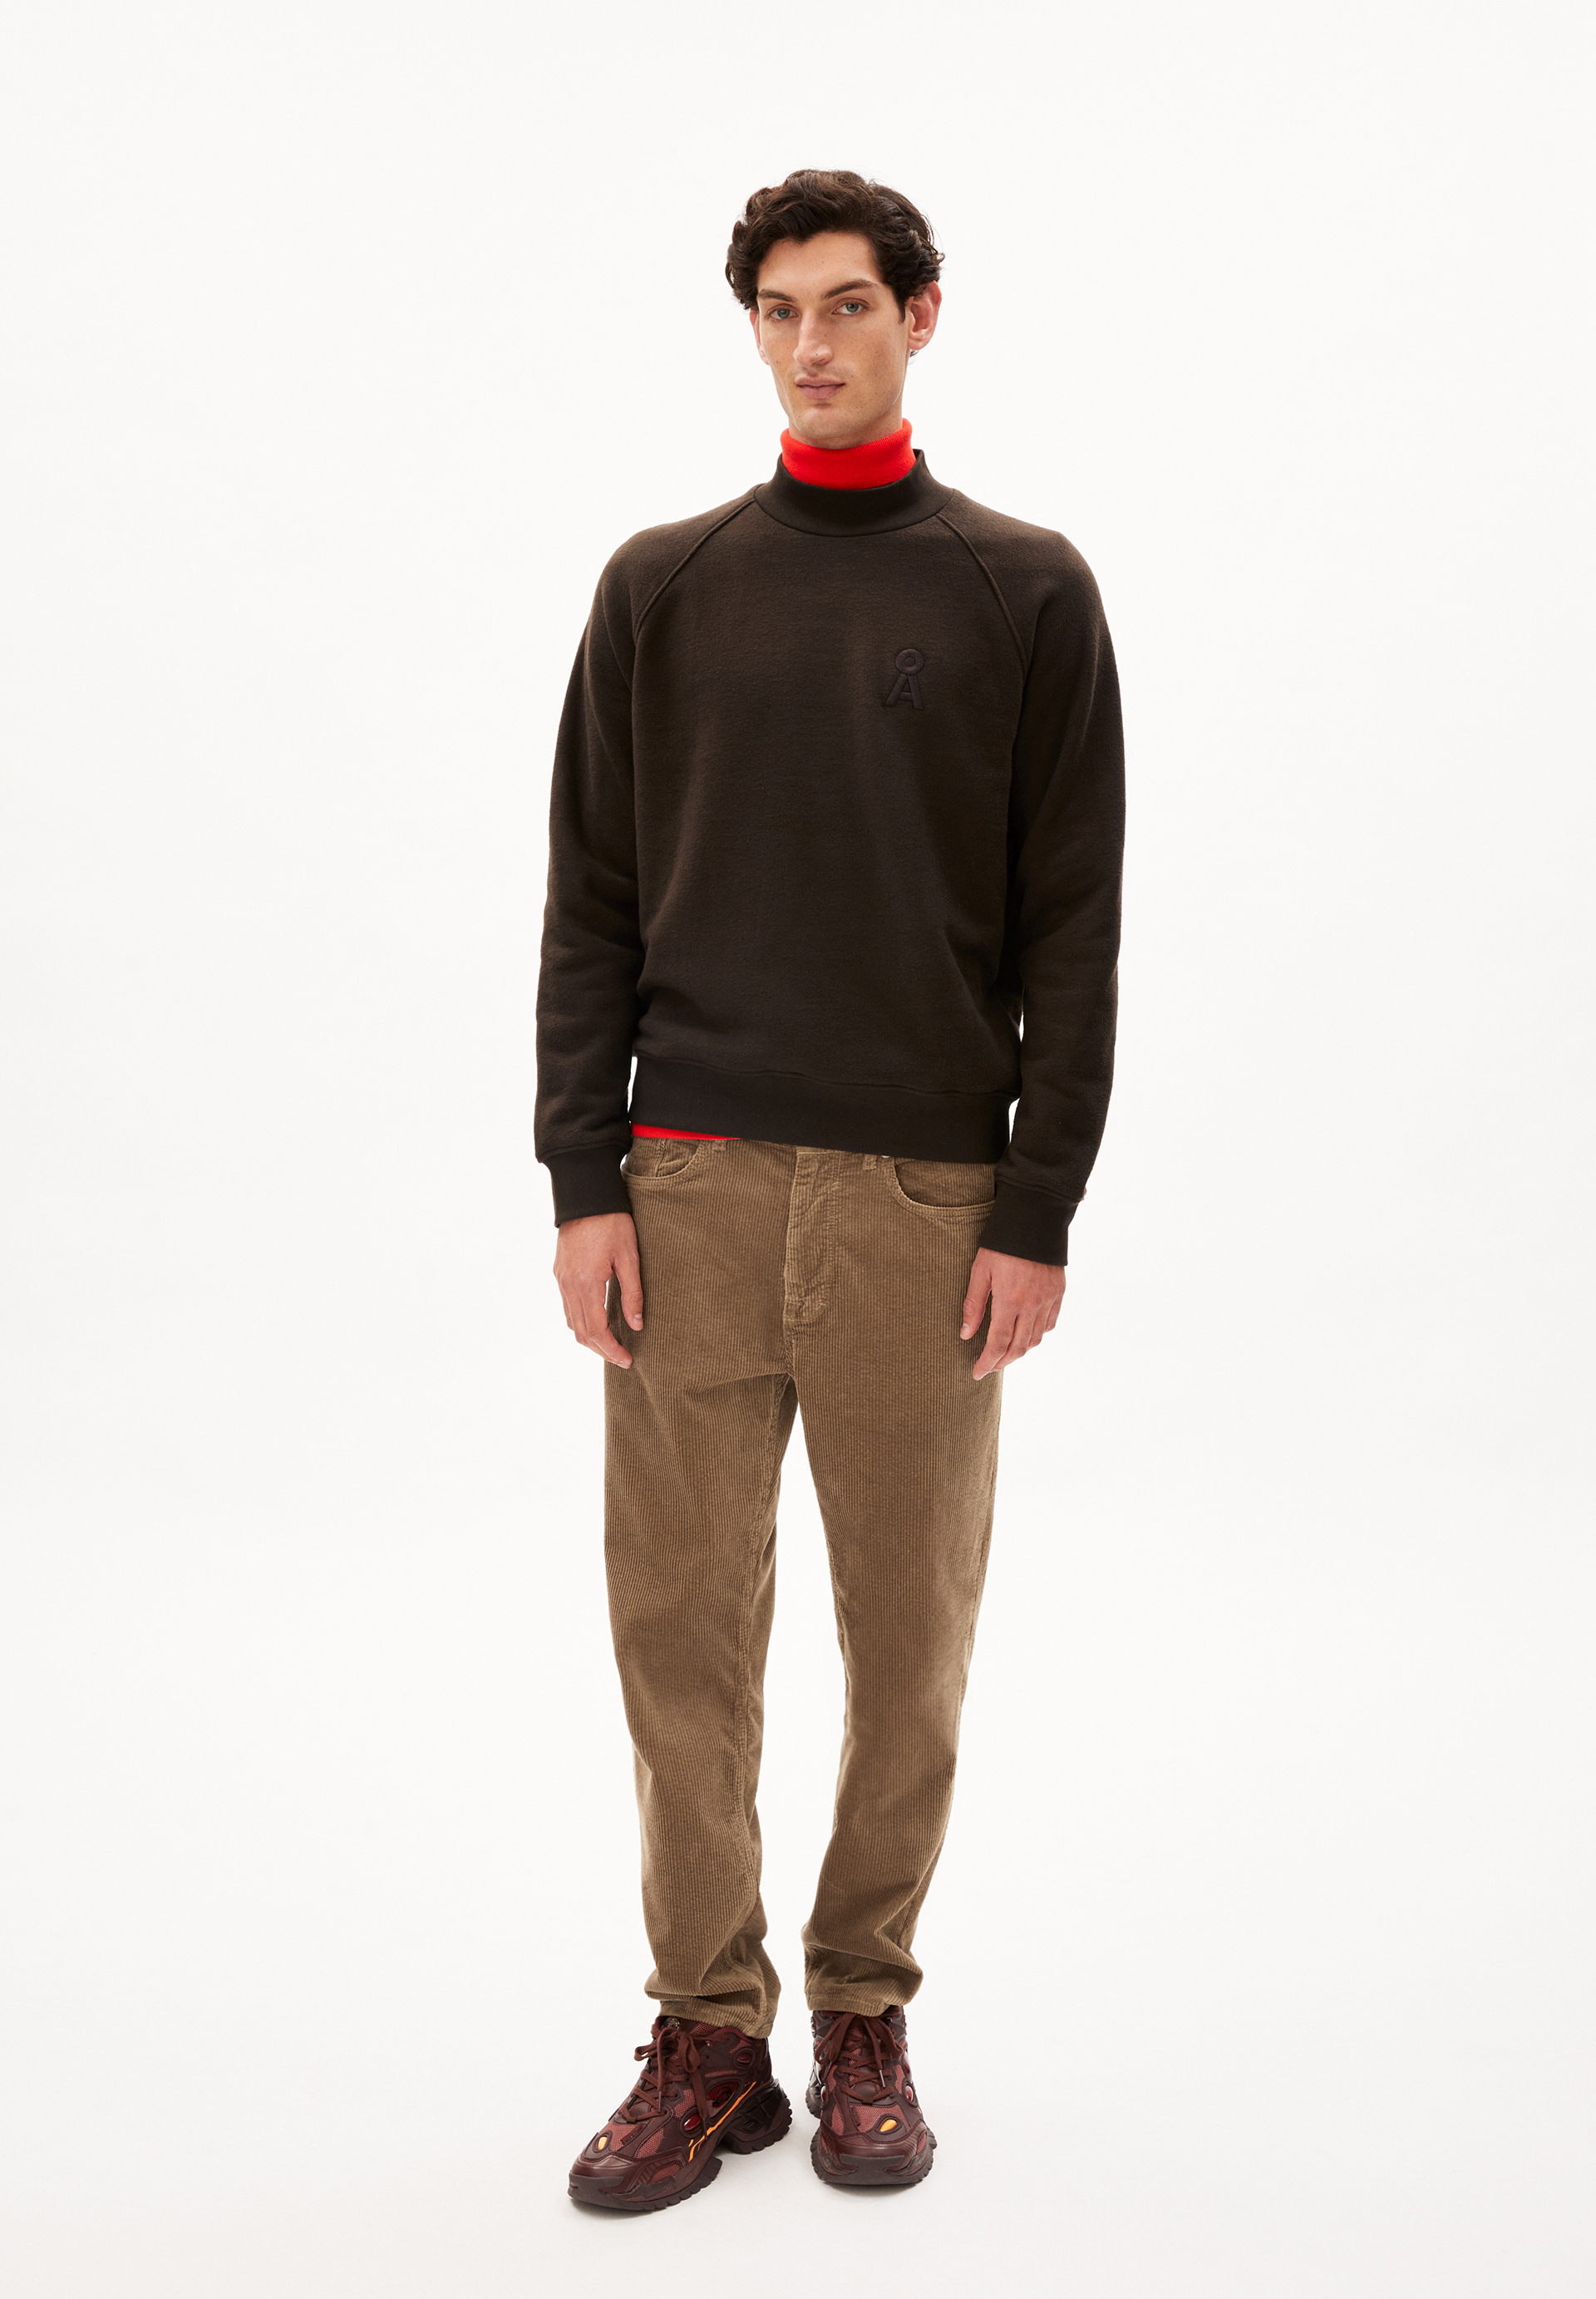 CAAYOS BRUSHED Sweatshirt Regular Fit aus Bio-Baumwolle